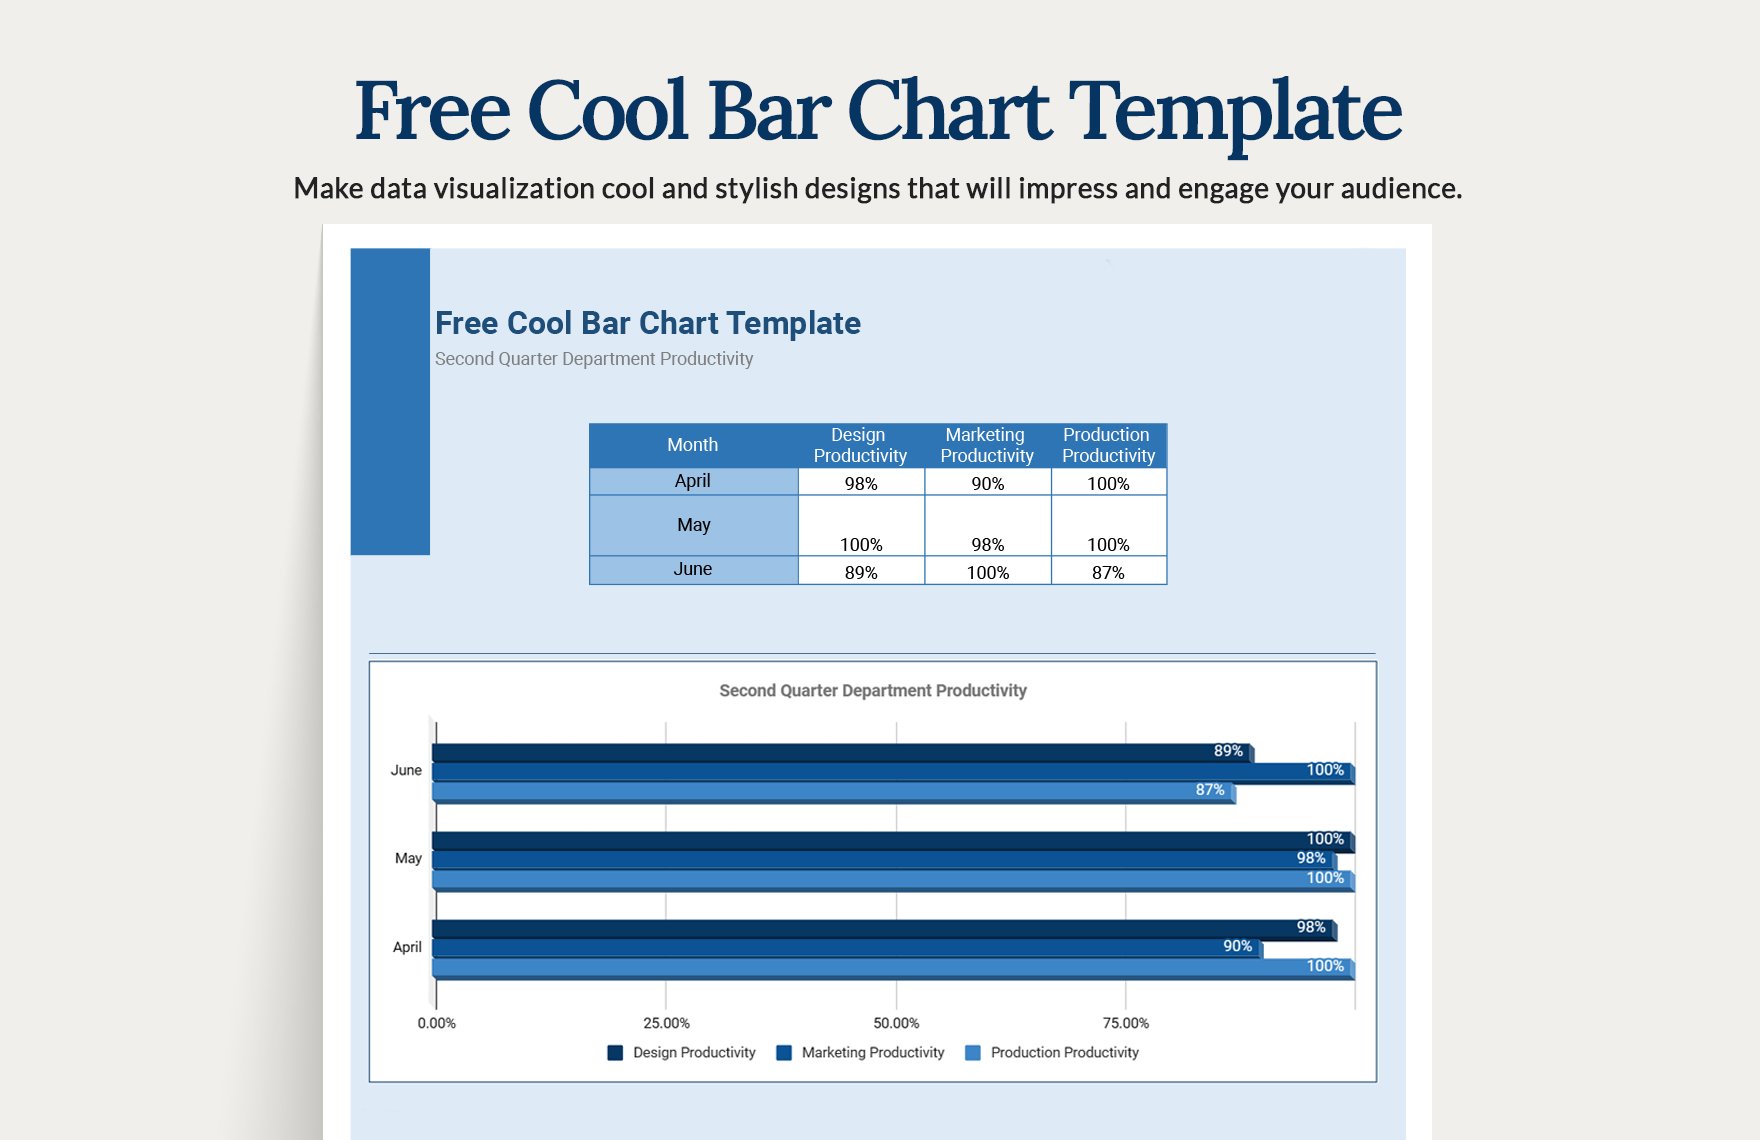 Free Cool Bar Chart Template